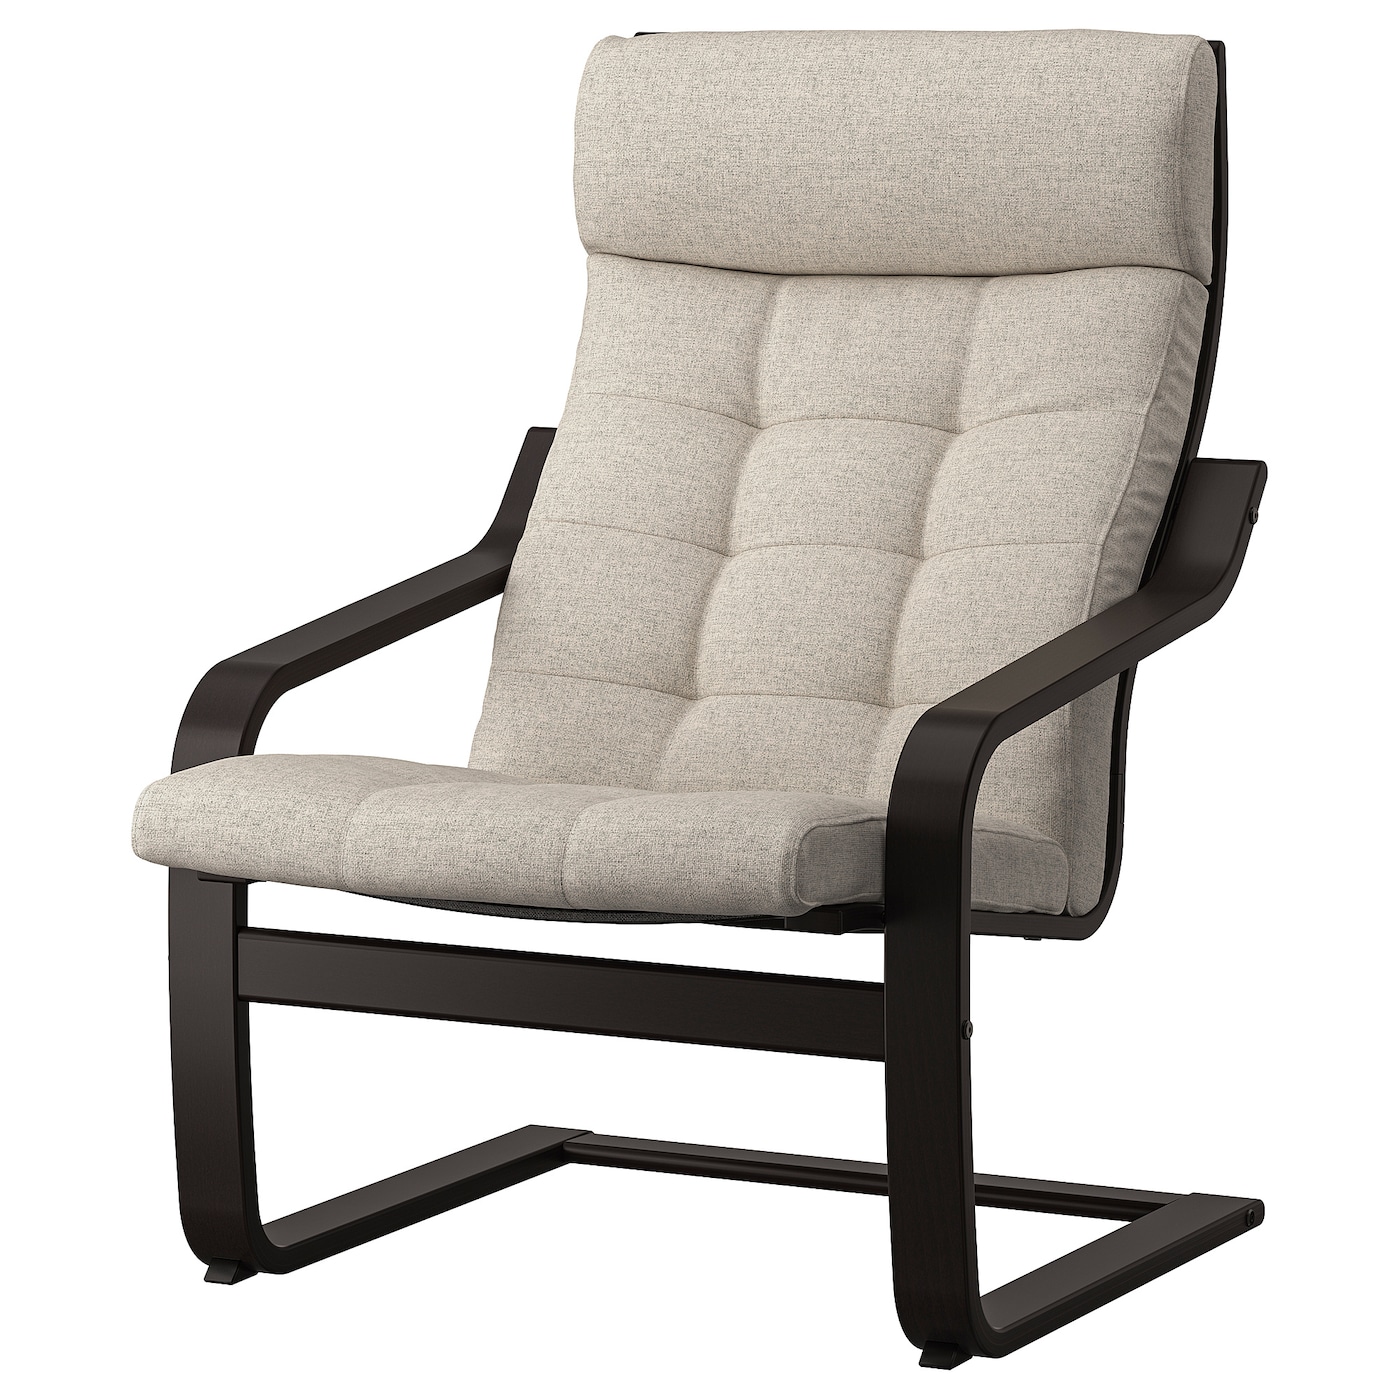 Кресло - IKEA POÄNG/POANG/ПОЭНГ ИКЕА, 68х82х100 см, светло-серый